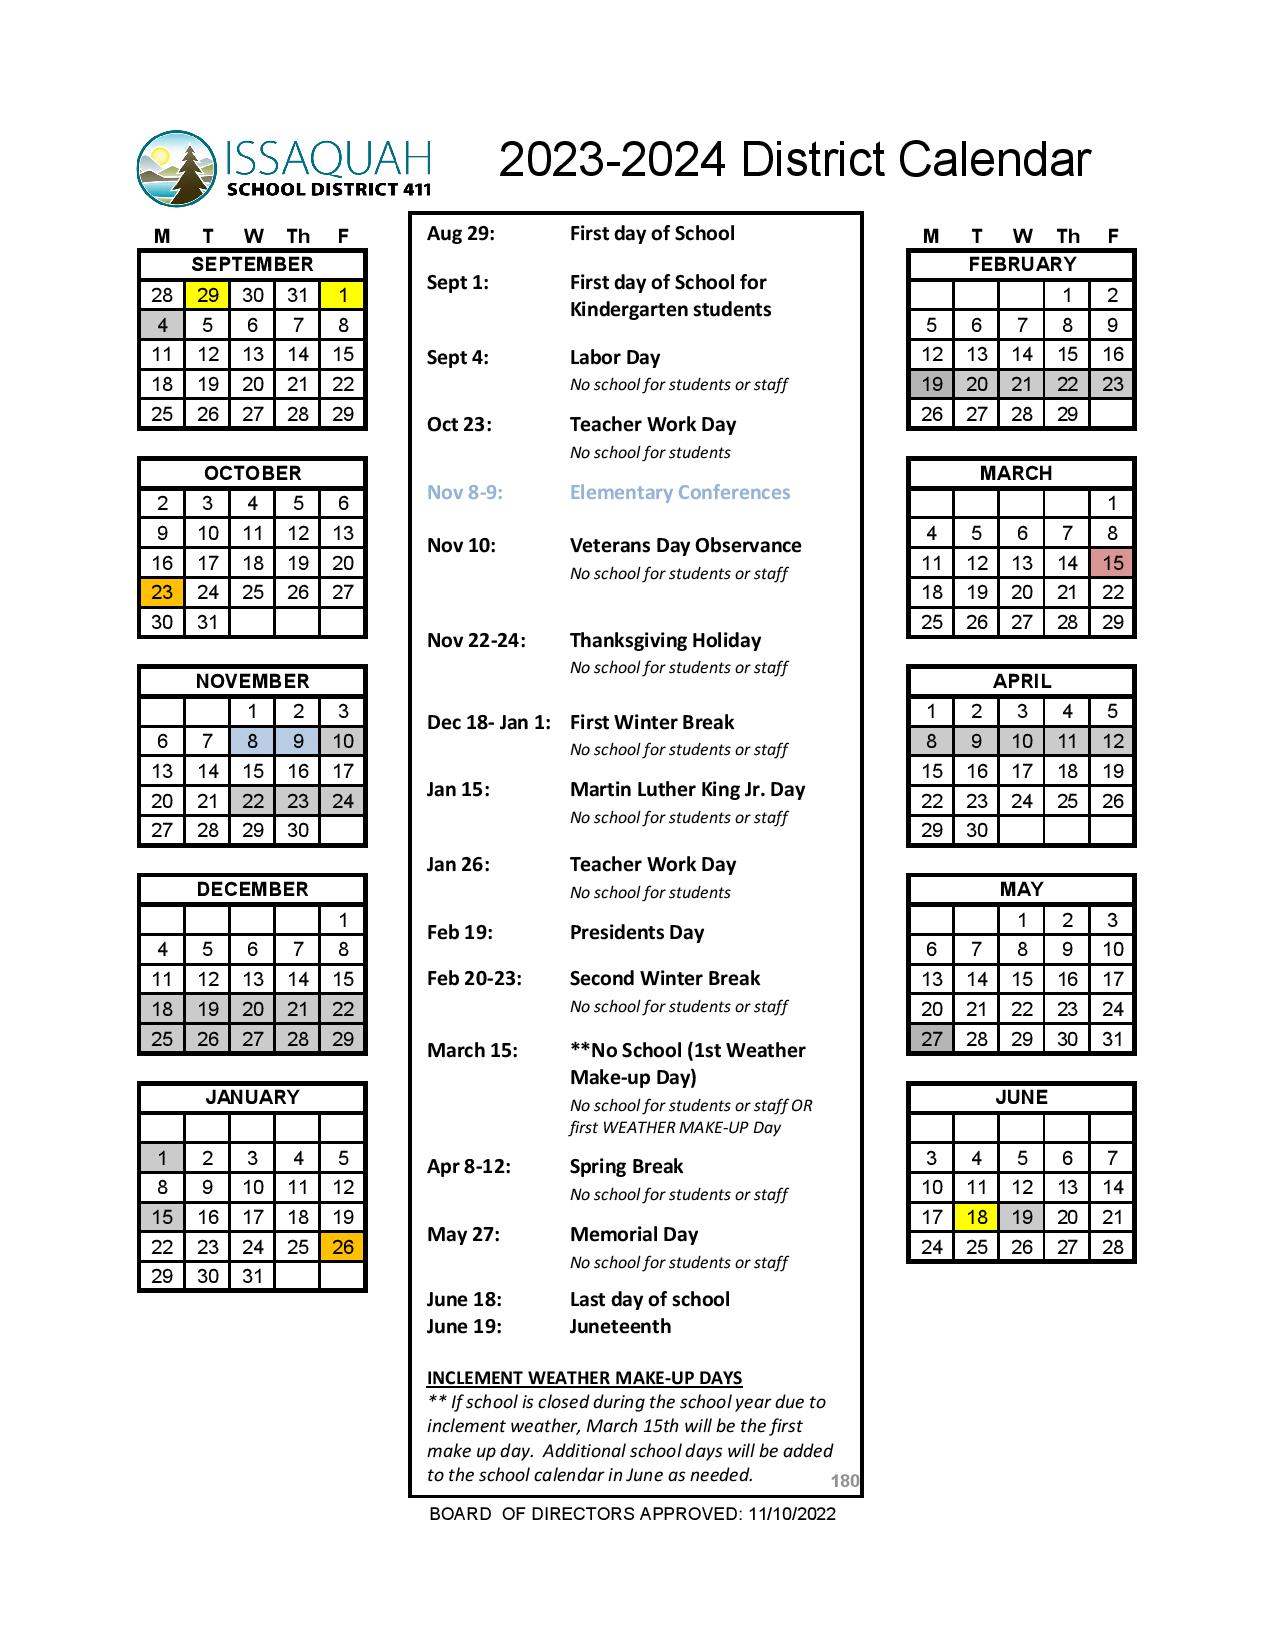 Issaquah School District Calendar 2023-2024